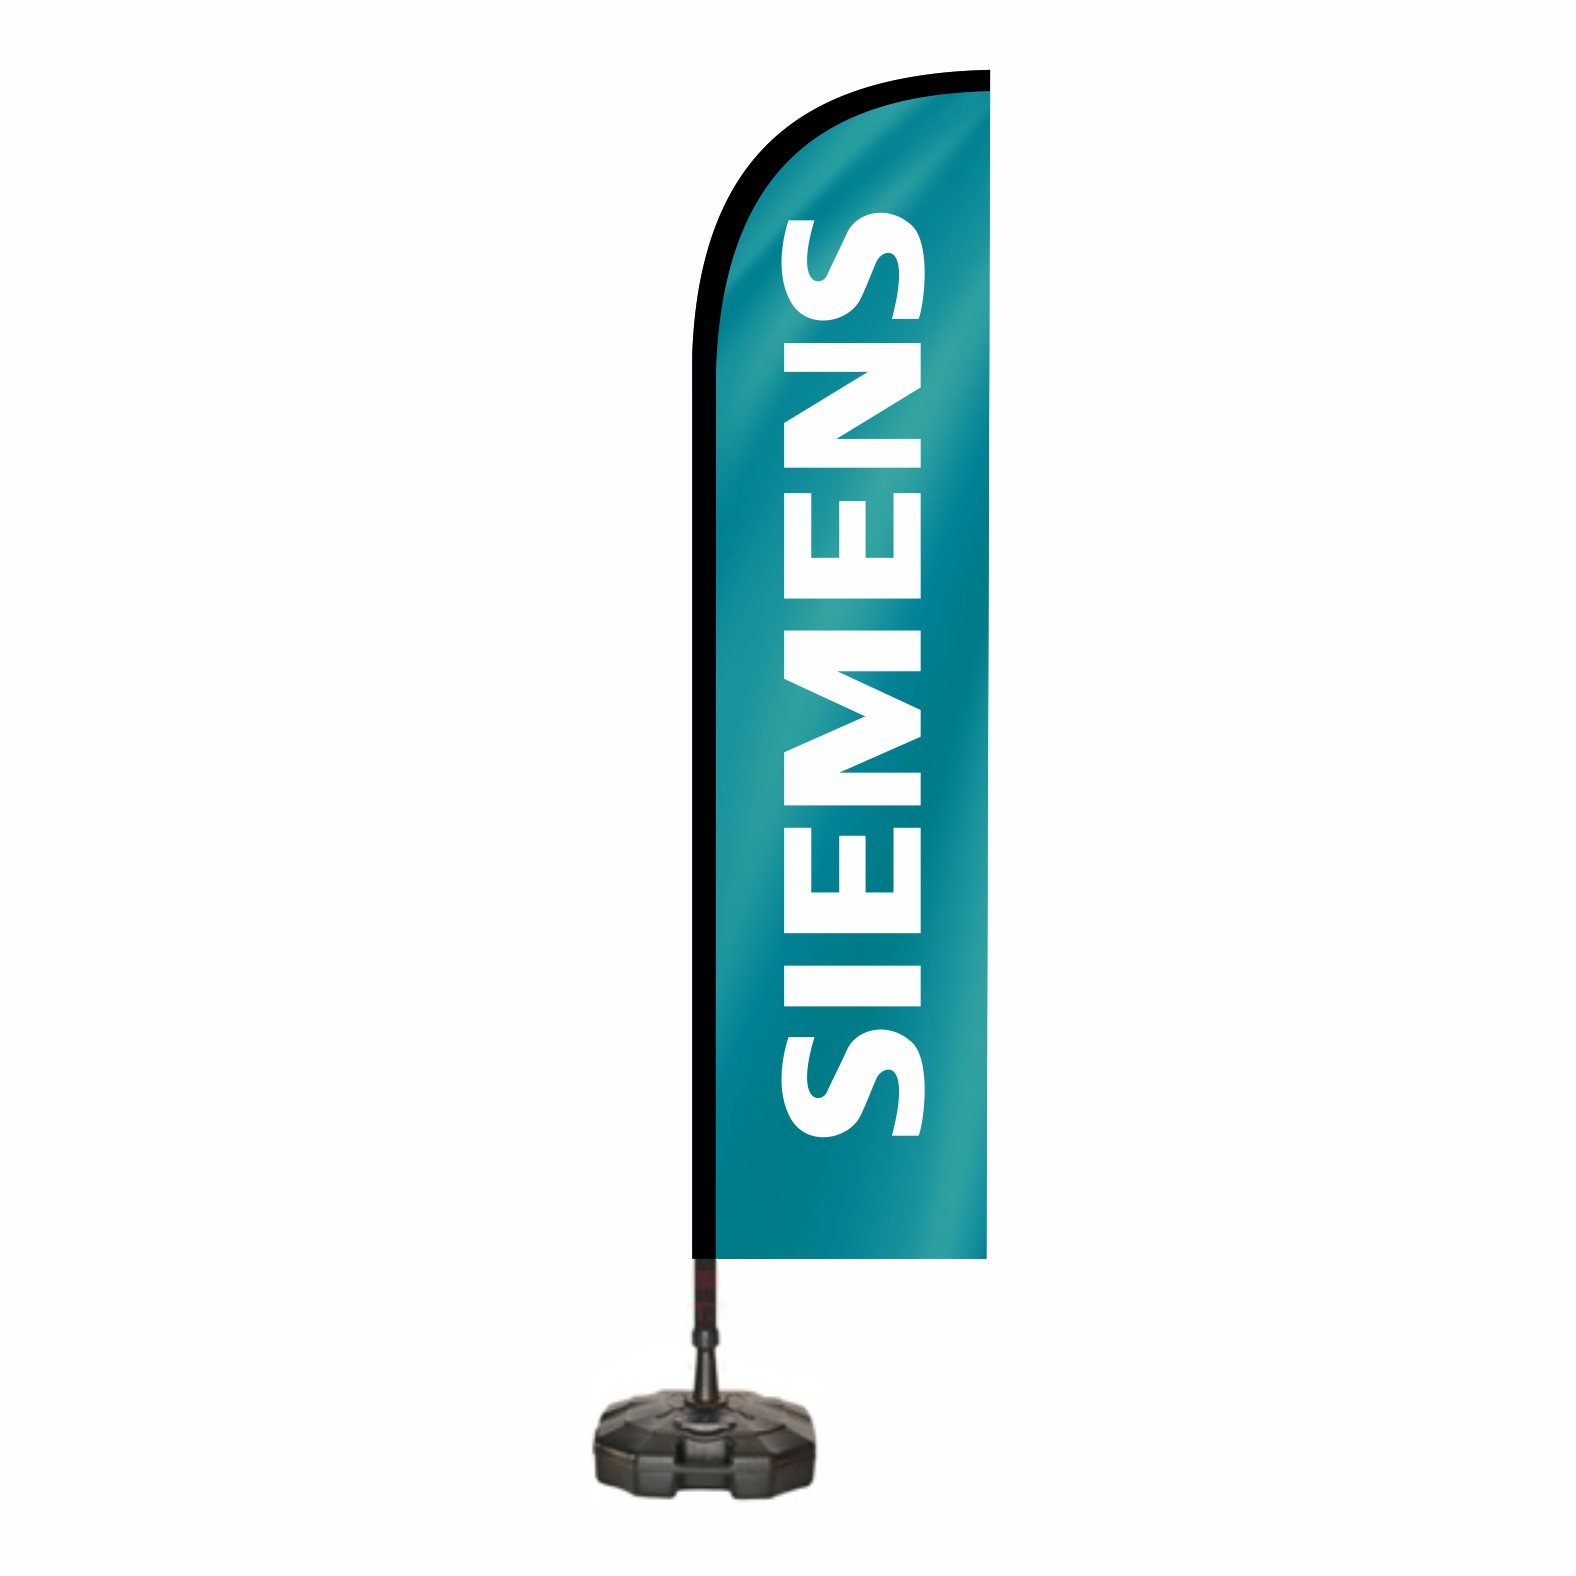 Siemens Yelken Bayraklar Fiyat